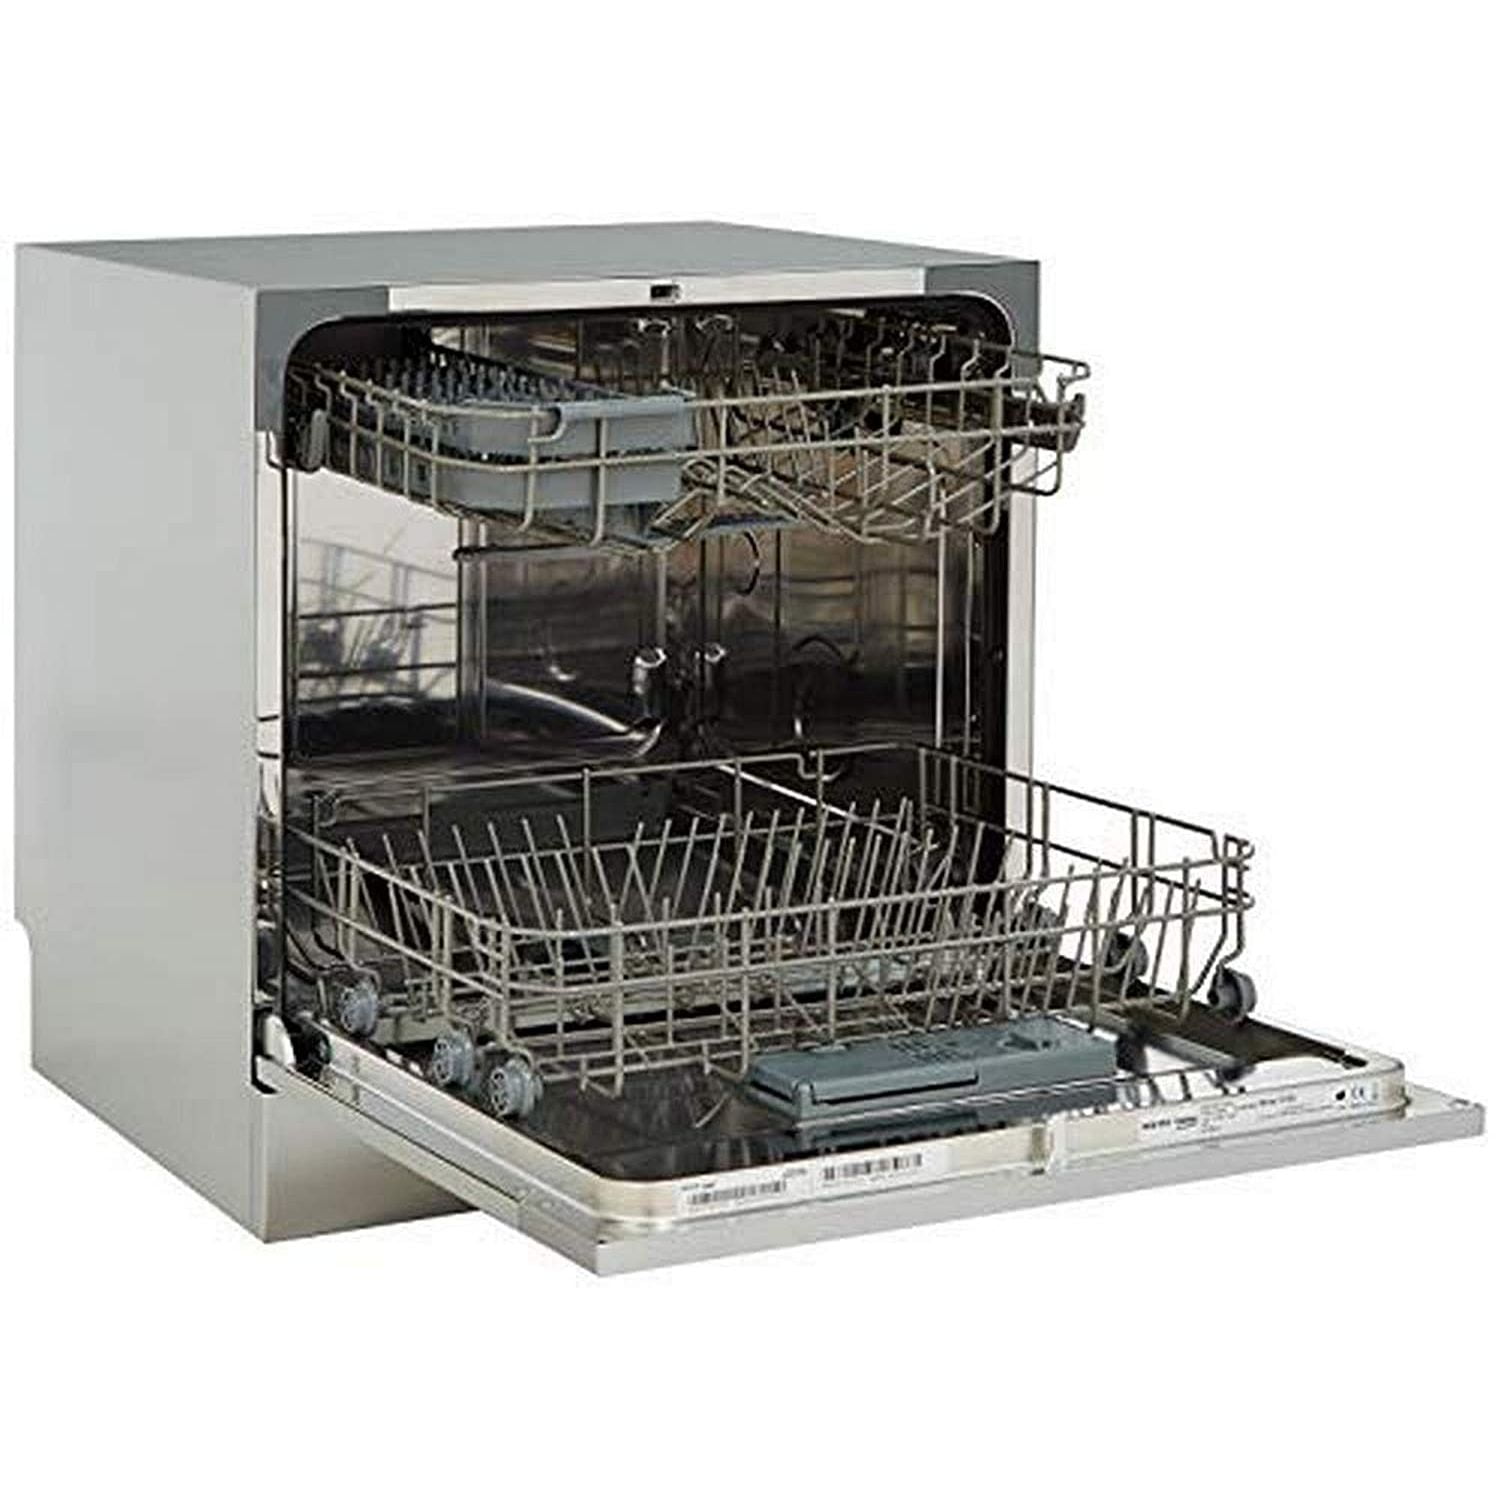 Voltas Beko 8 Place Table Top Dishwasher (DT8S, Silver)